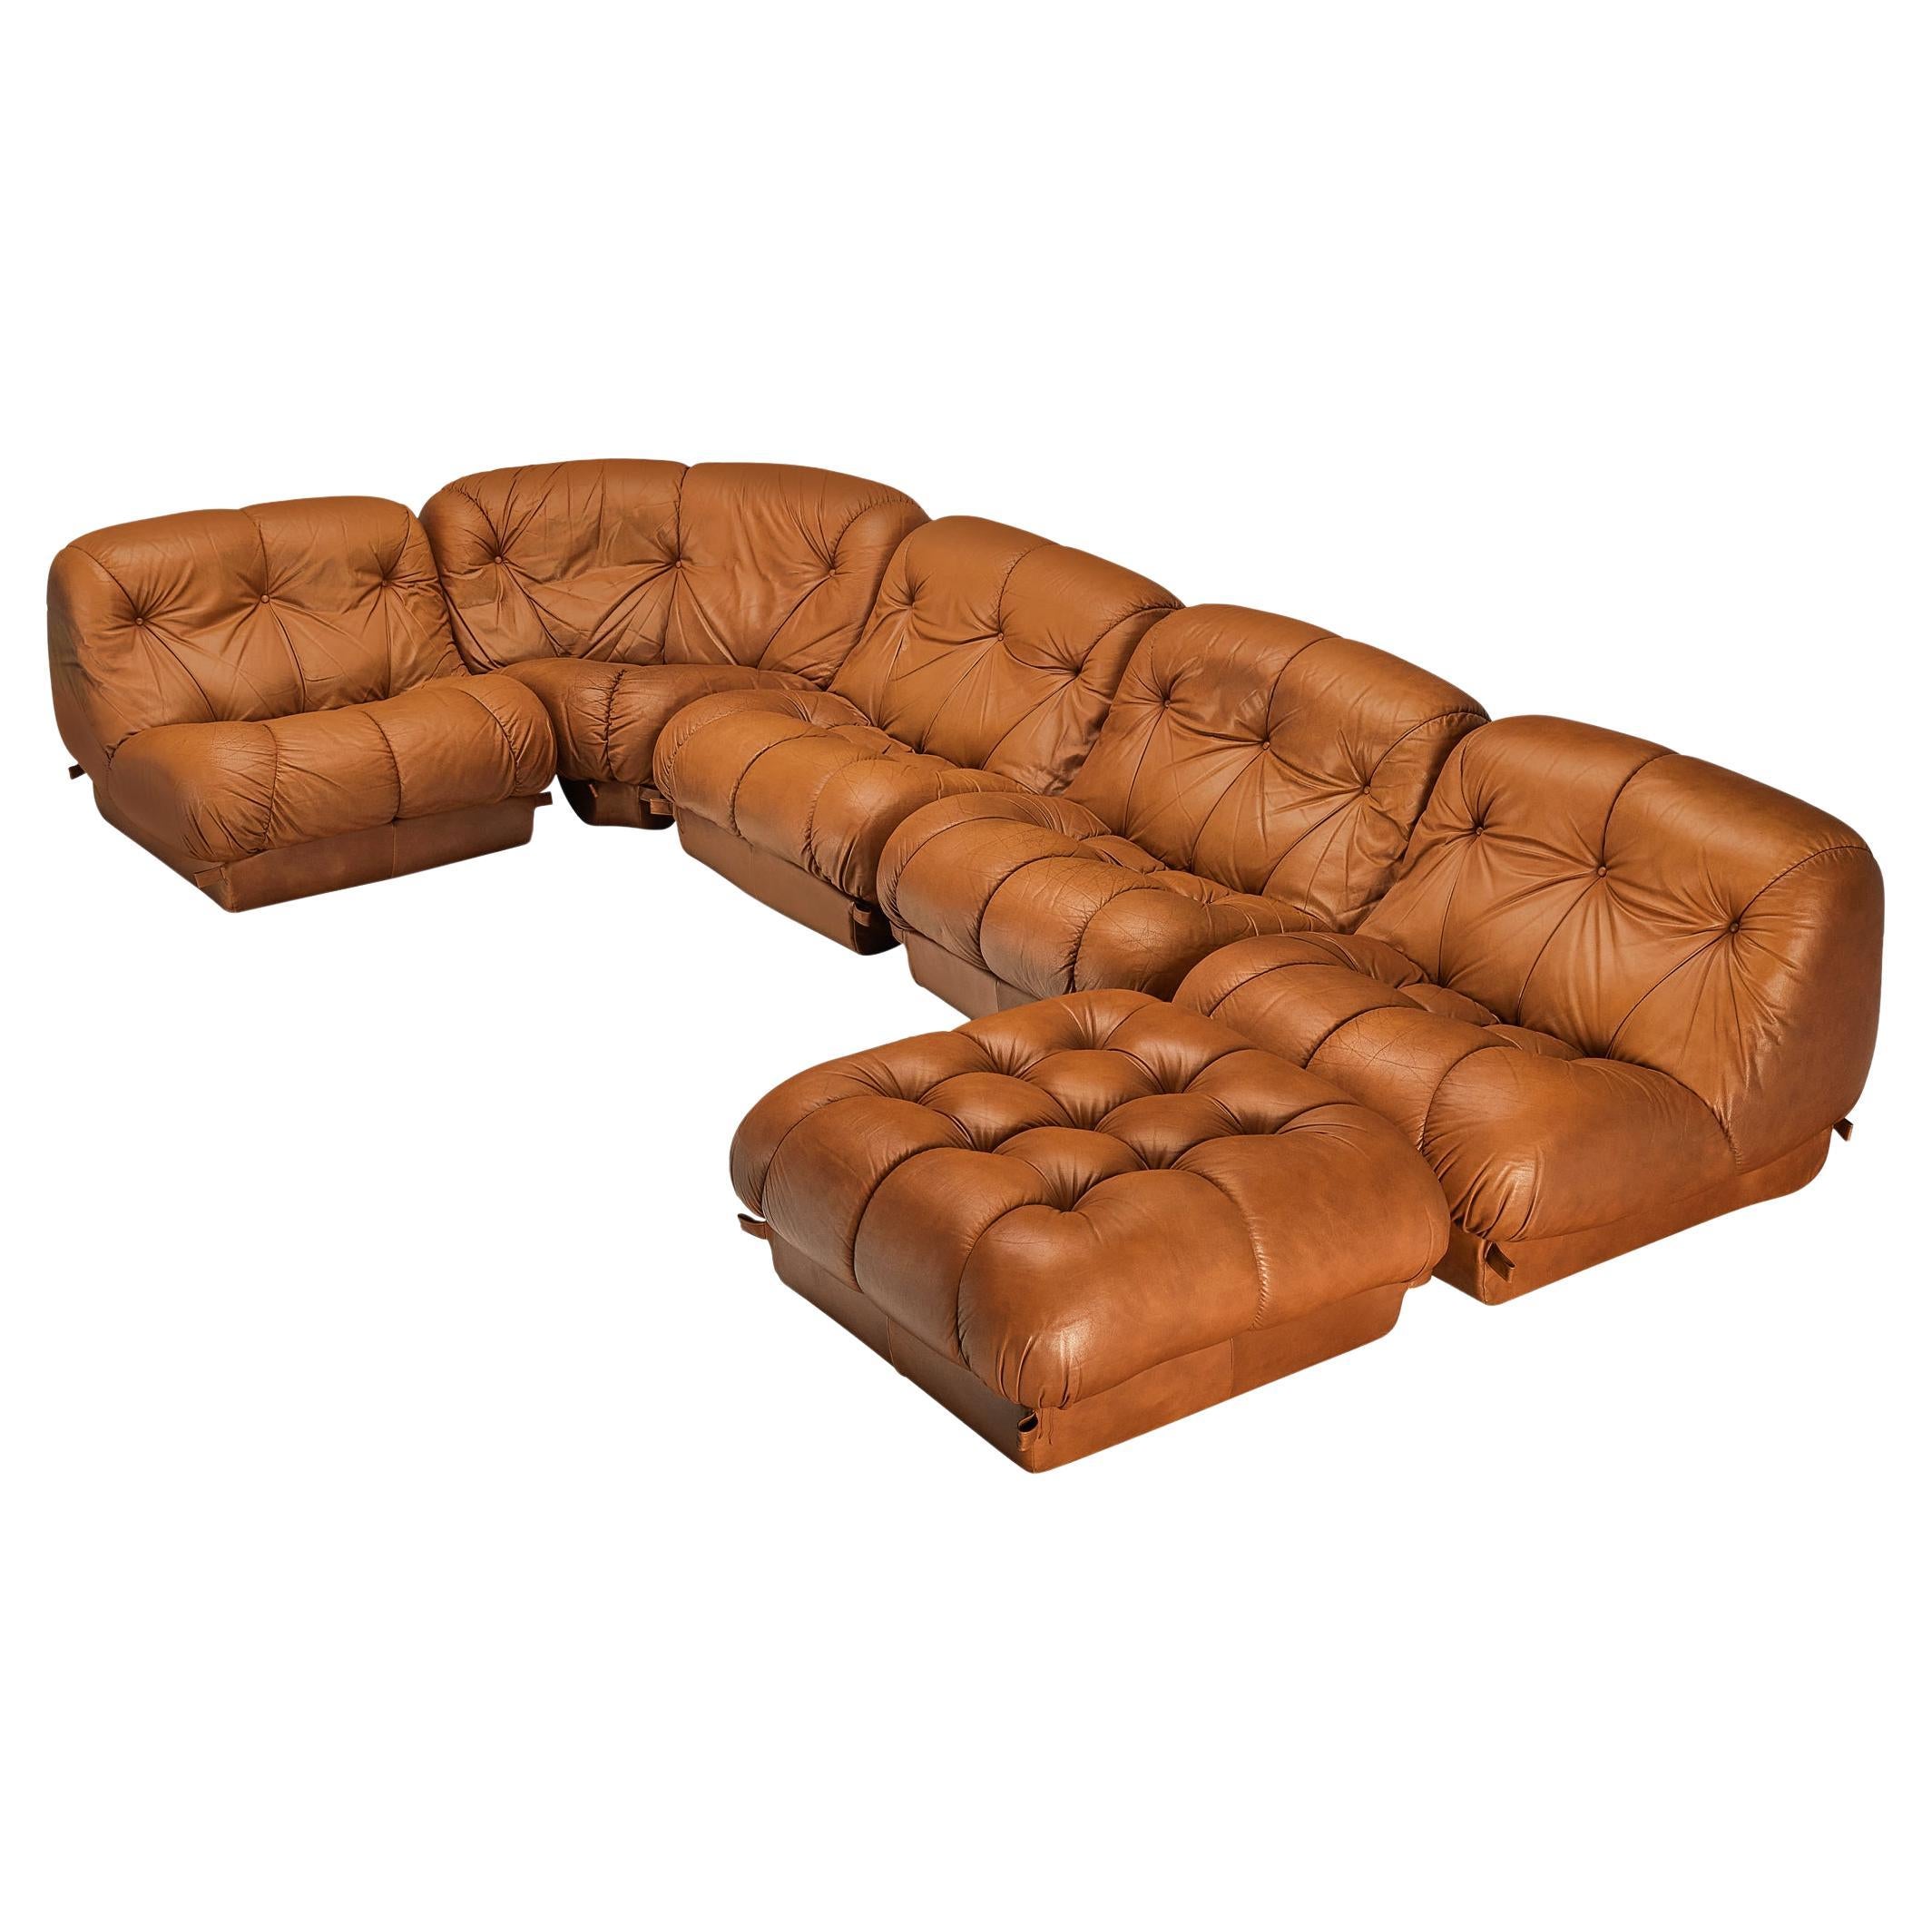 Can I dye a leather sofa?